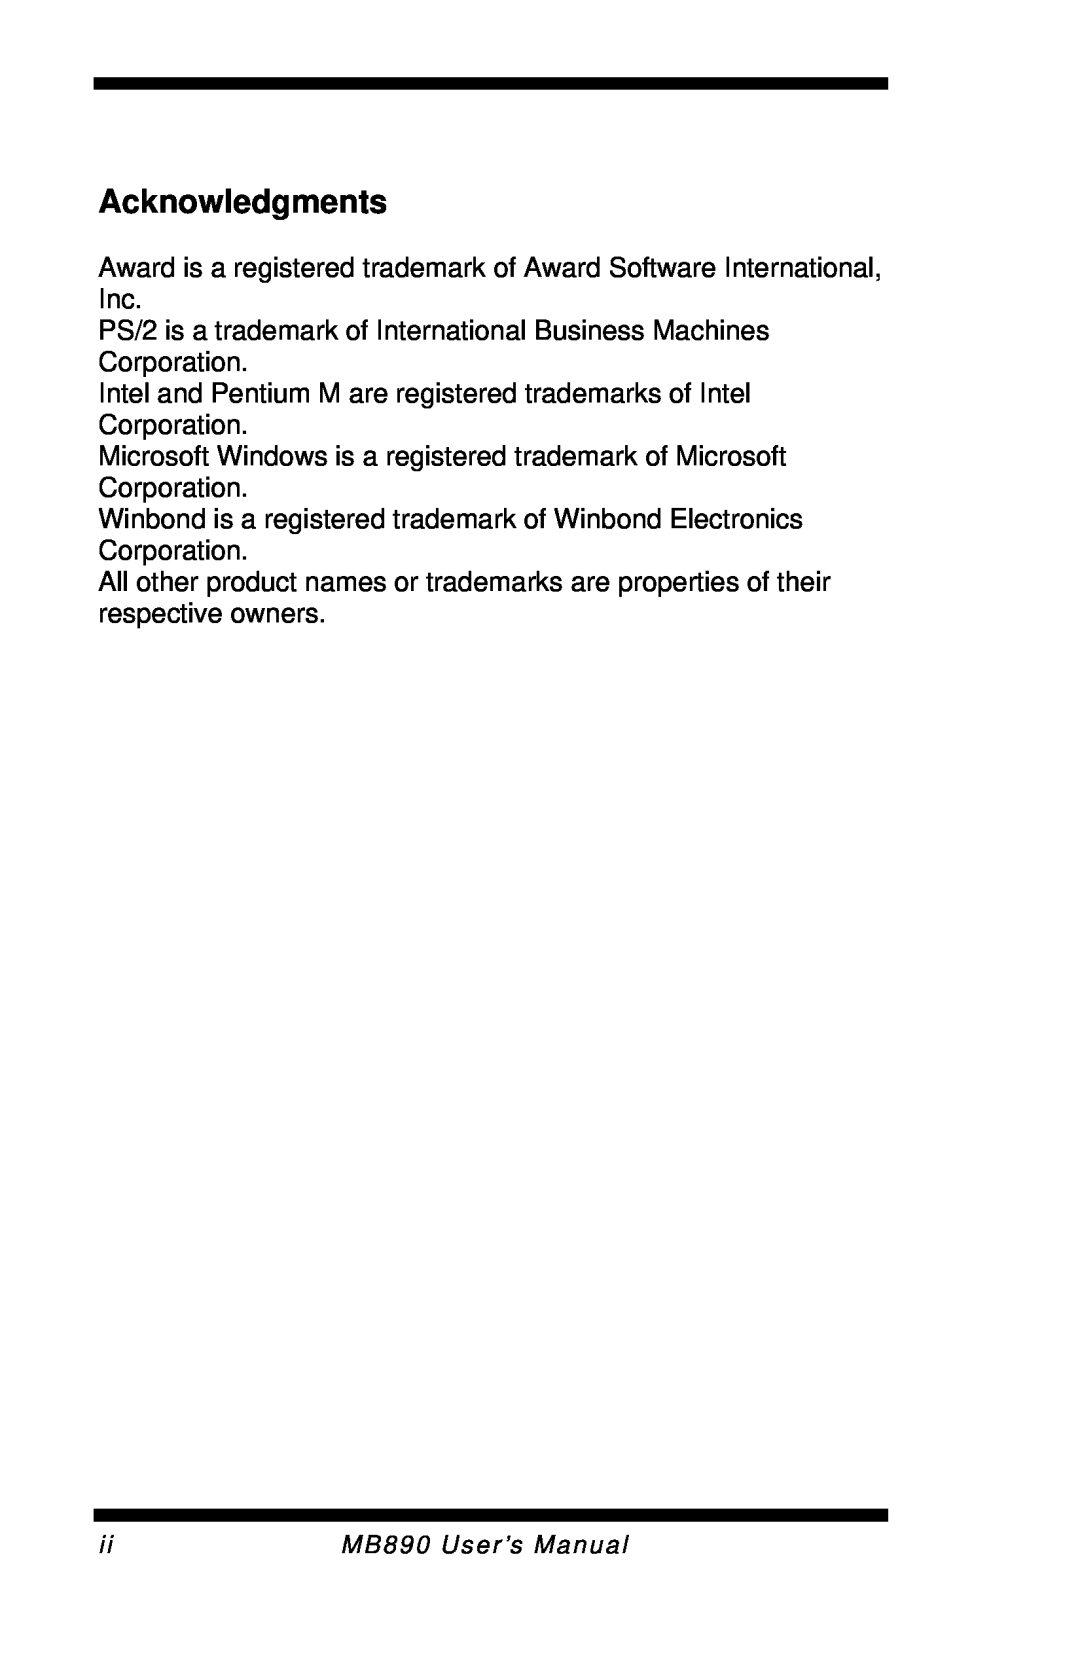 Intel MB890 user manual Acknowledgments 